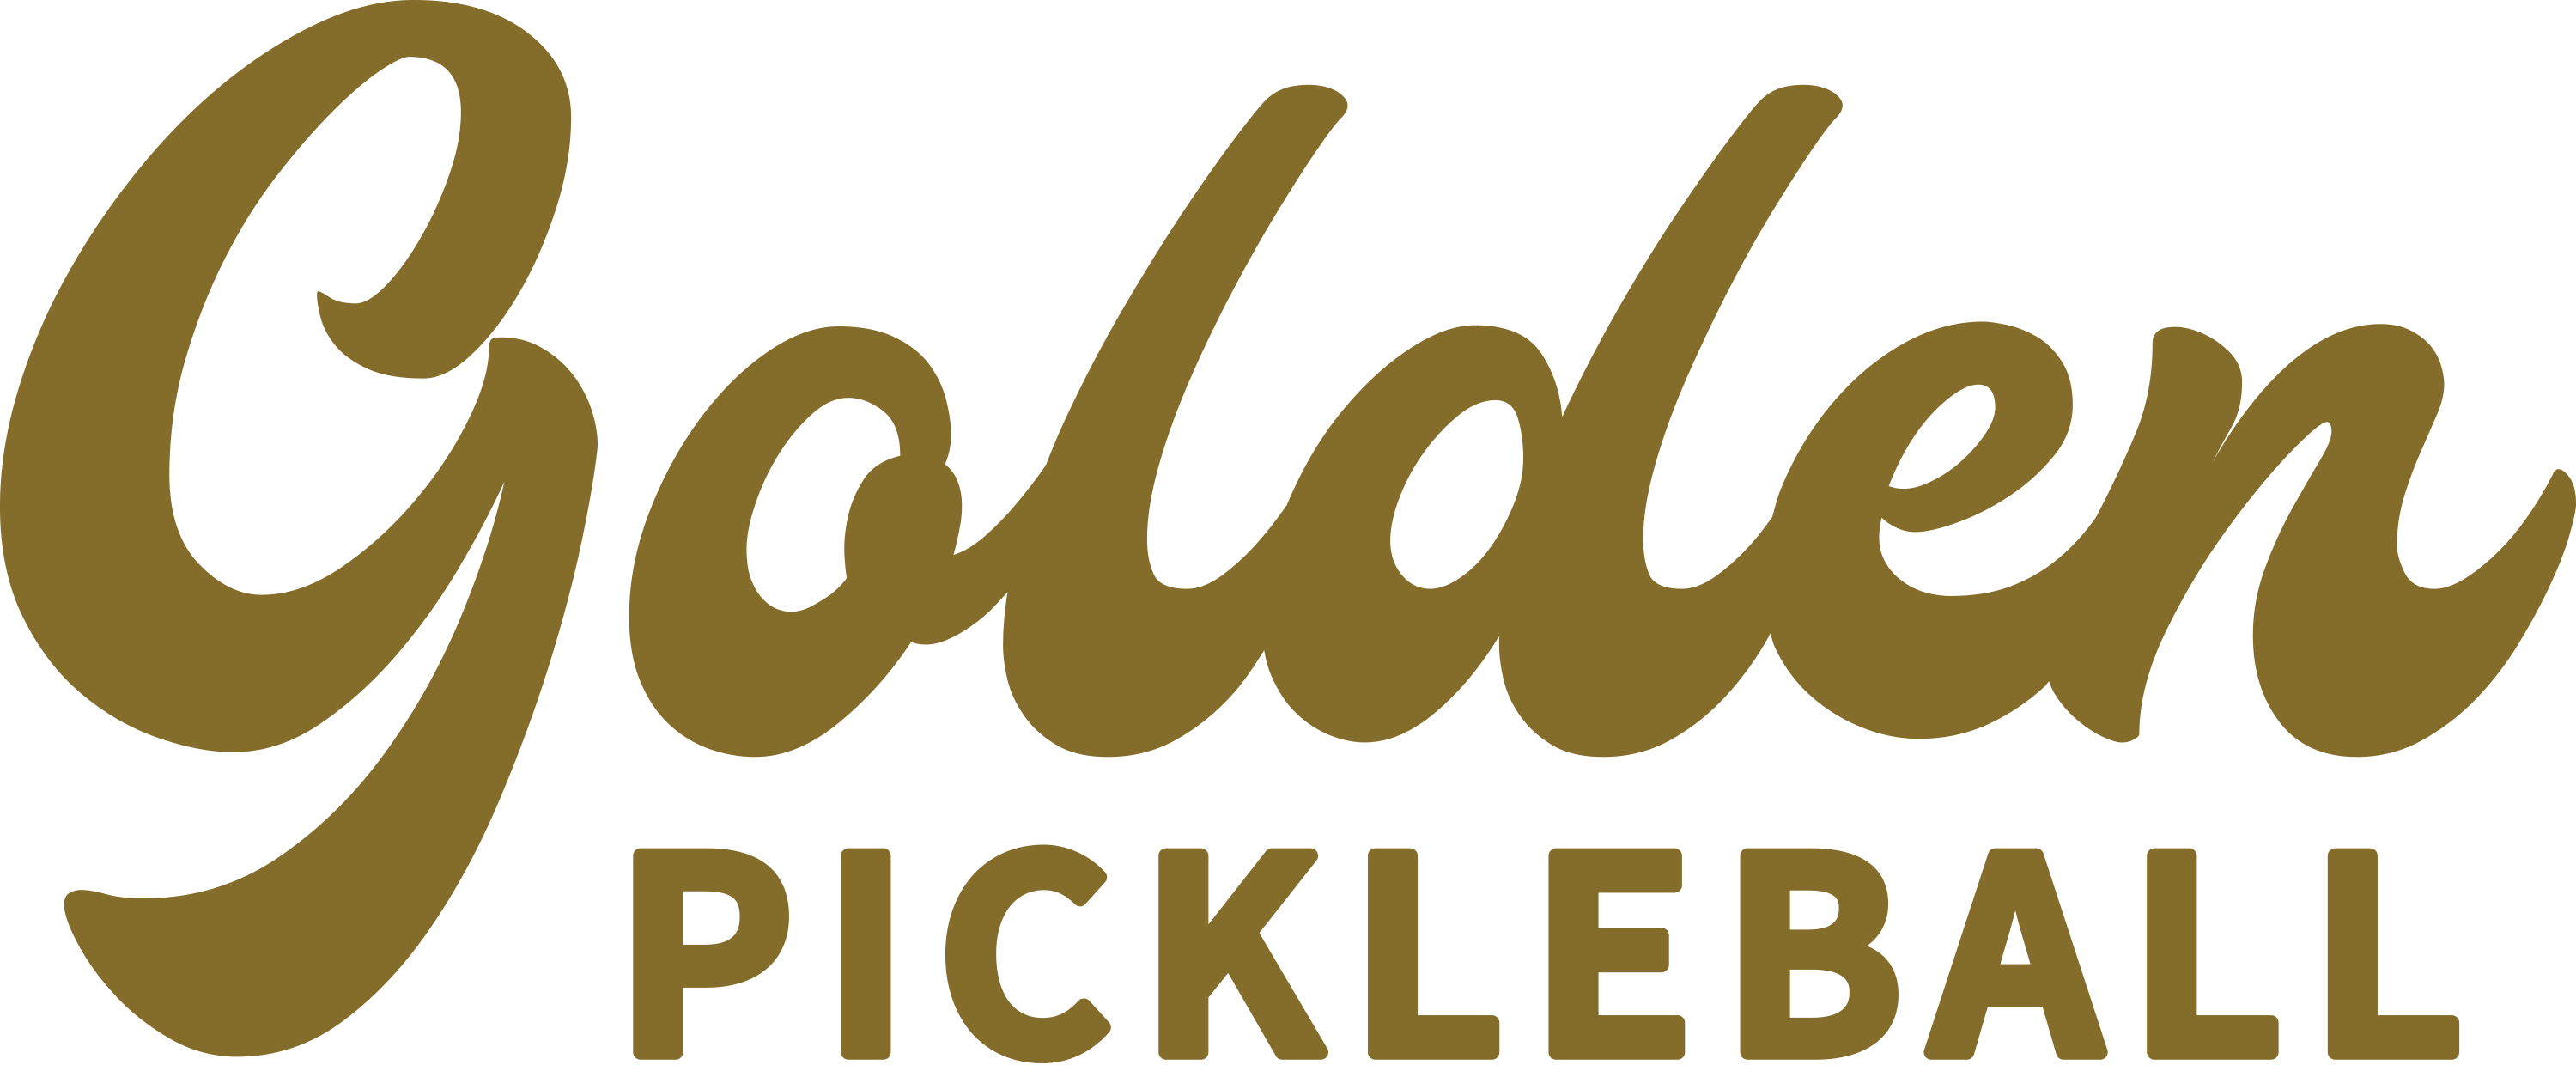 Golden Pickleball Coupon Codes